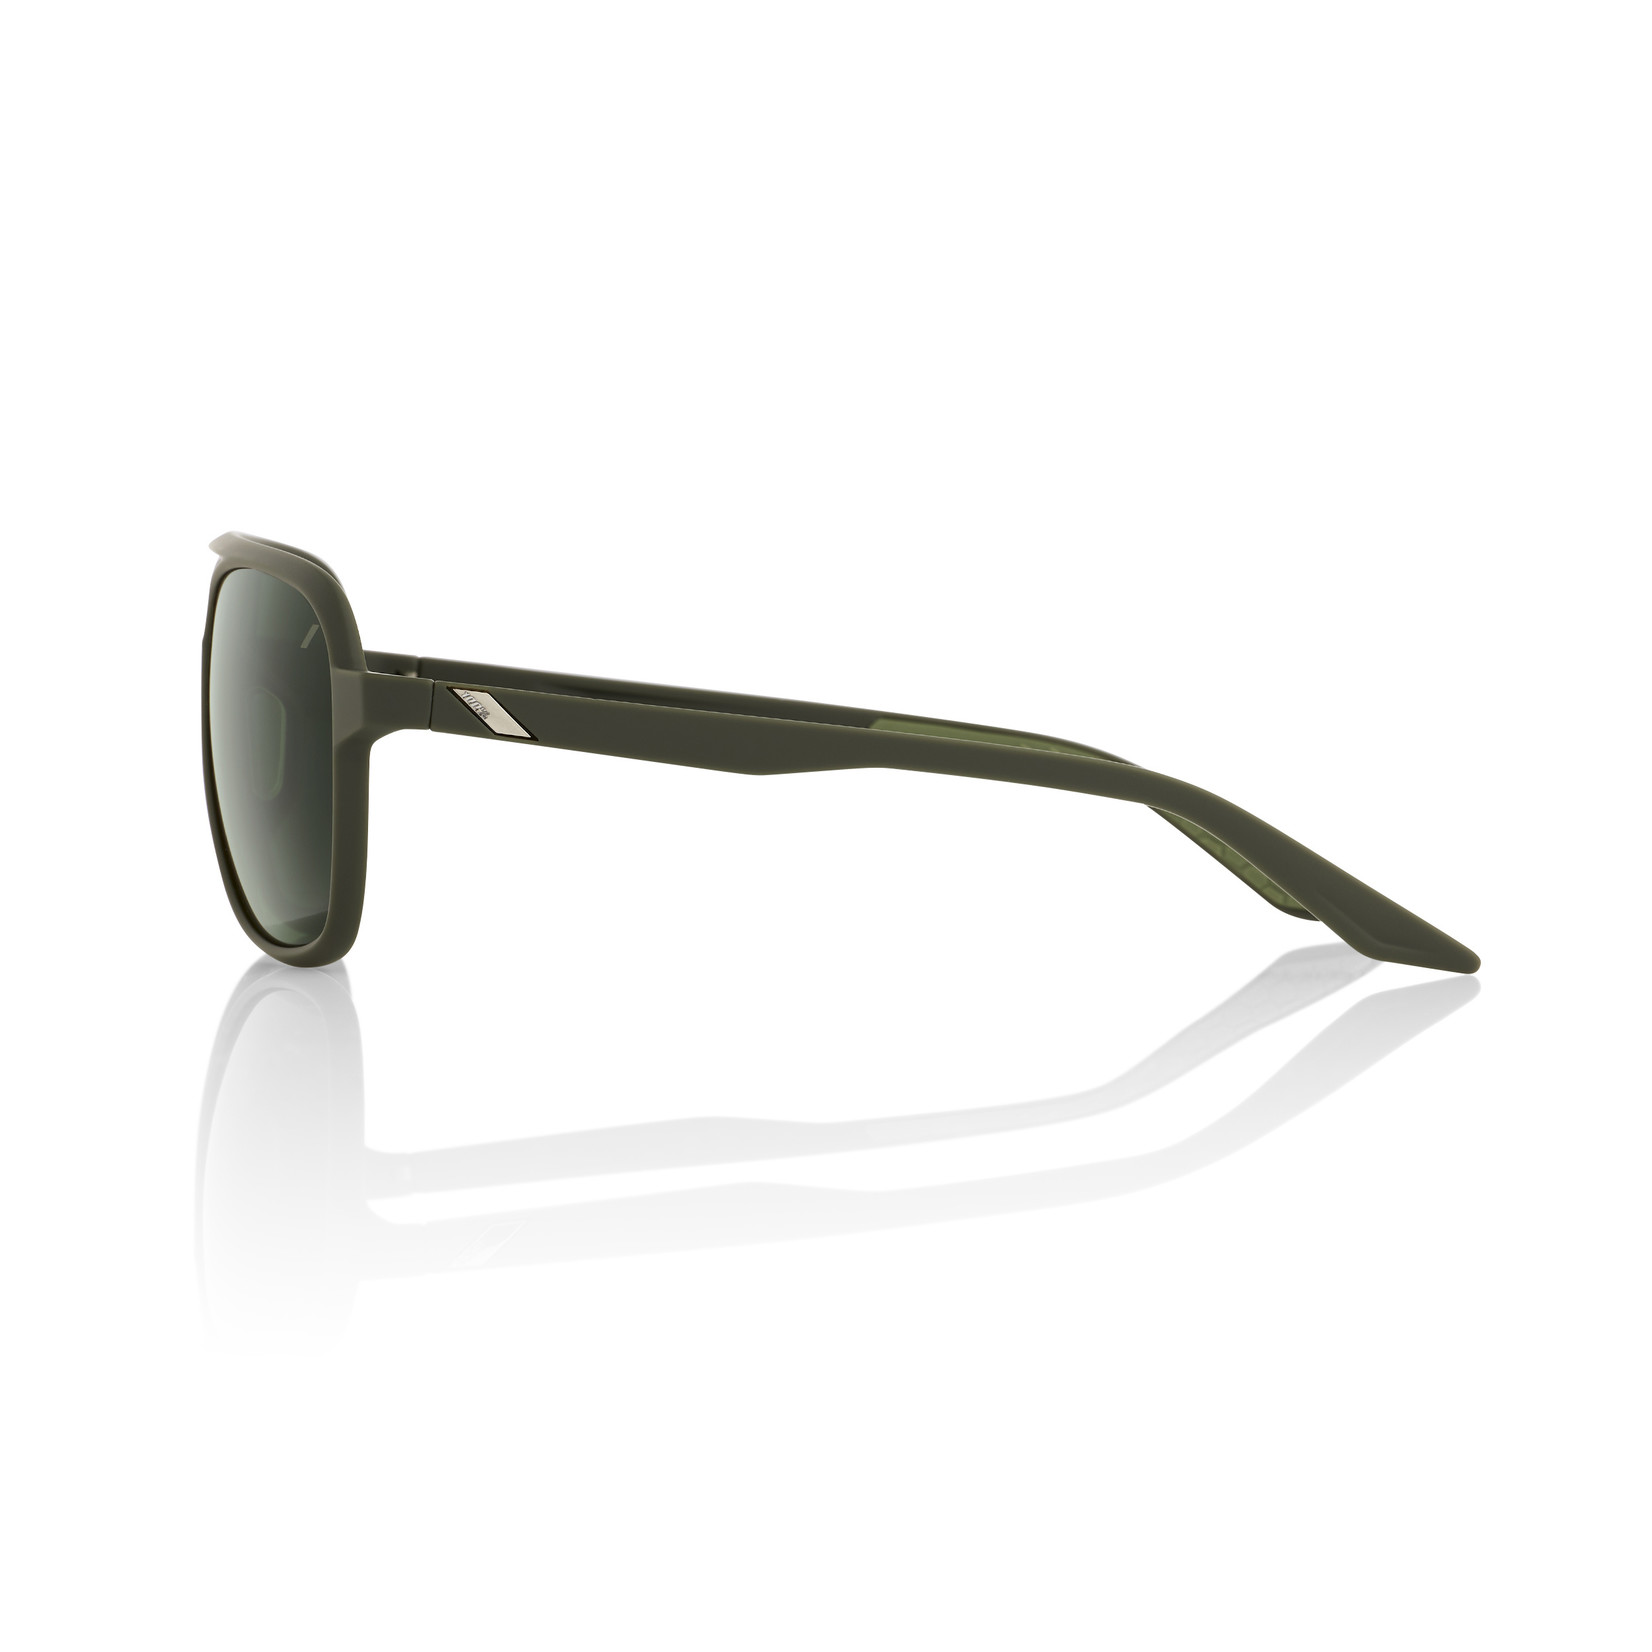 100 Percent 100% Kasia 100% UV Protection Sunglasses - Soft Tact Army Green - Grey Green